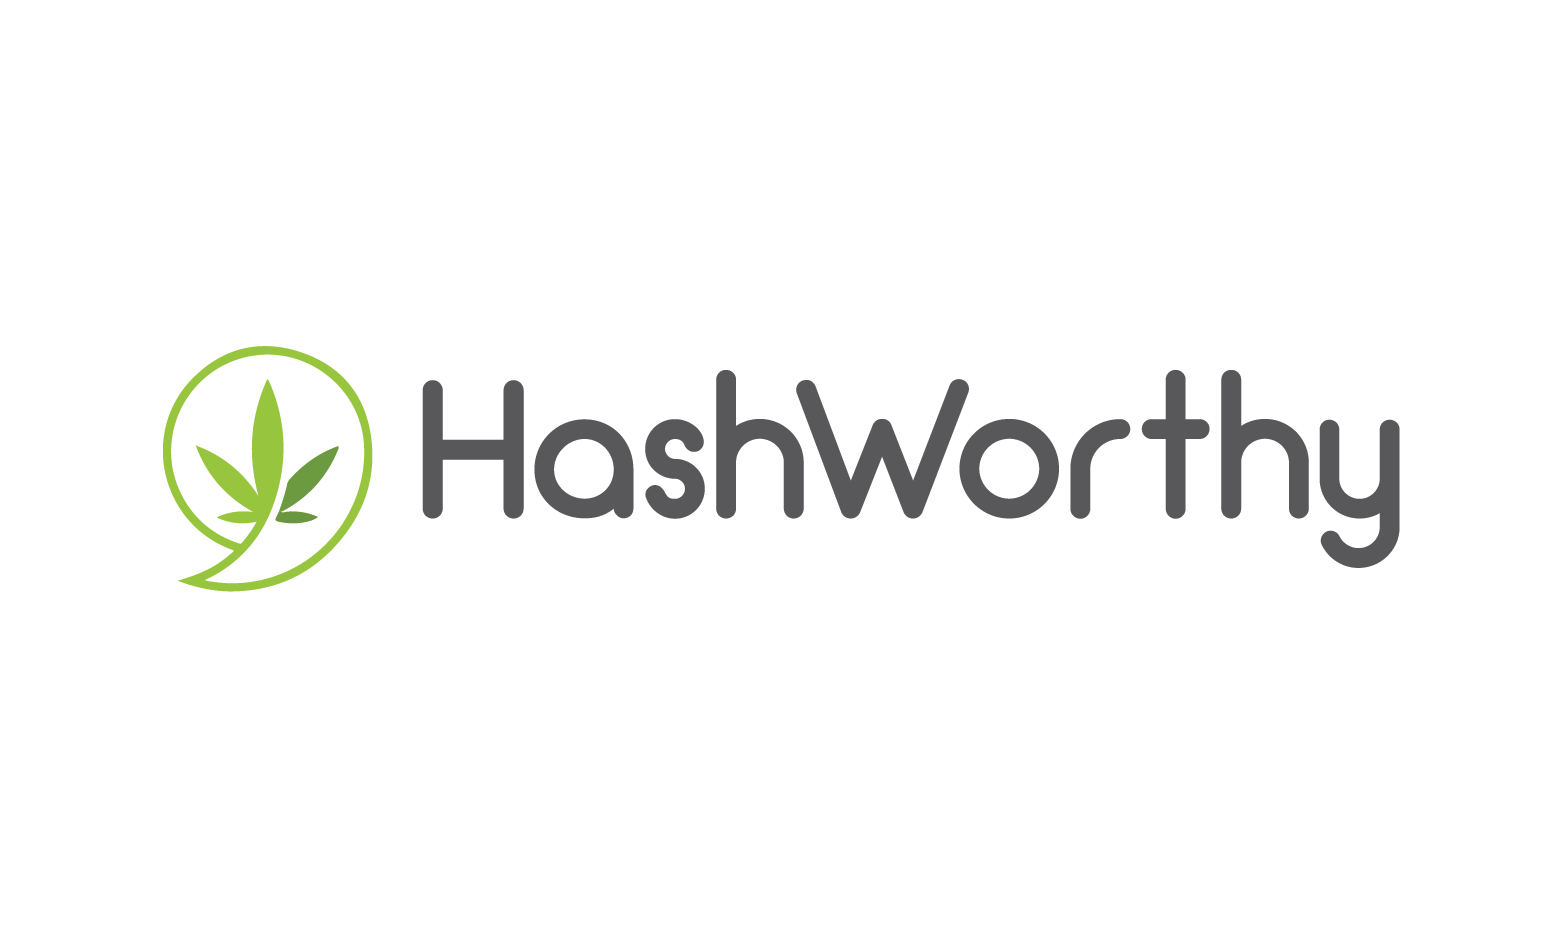 HashWorthy.com - Creative brandable domain for sale